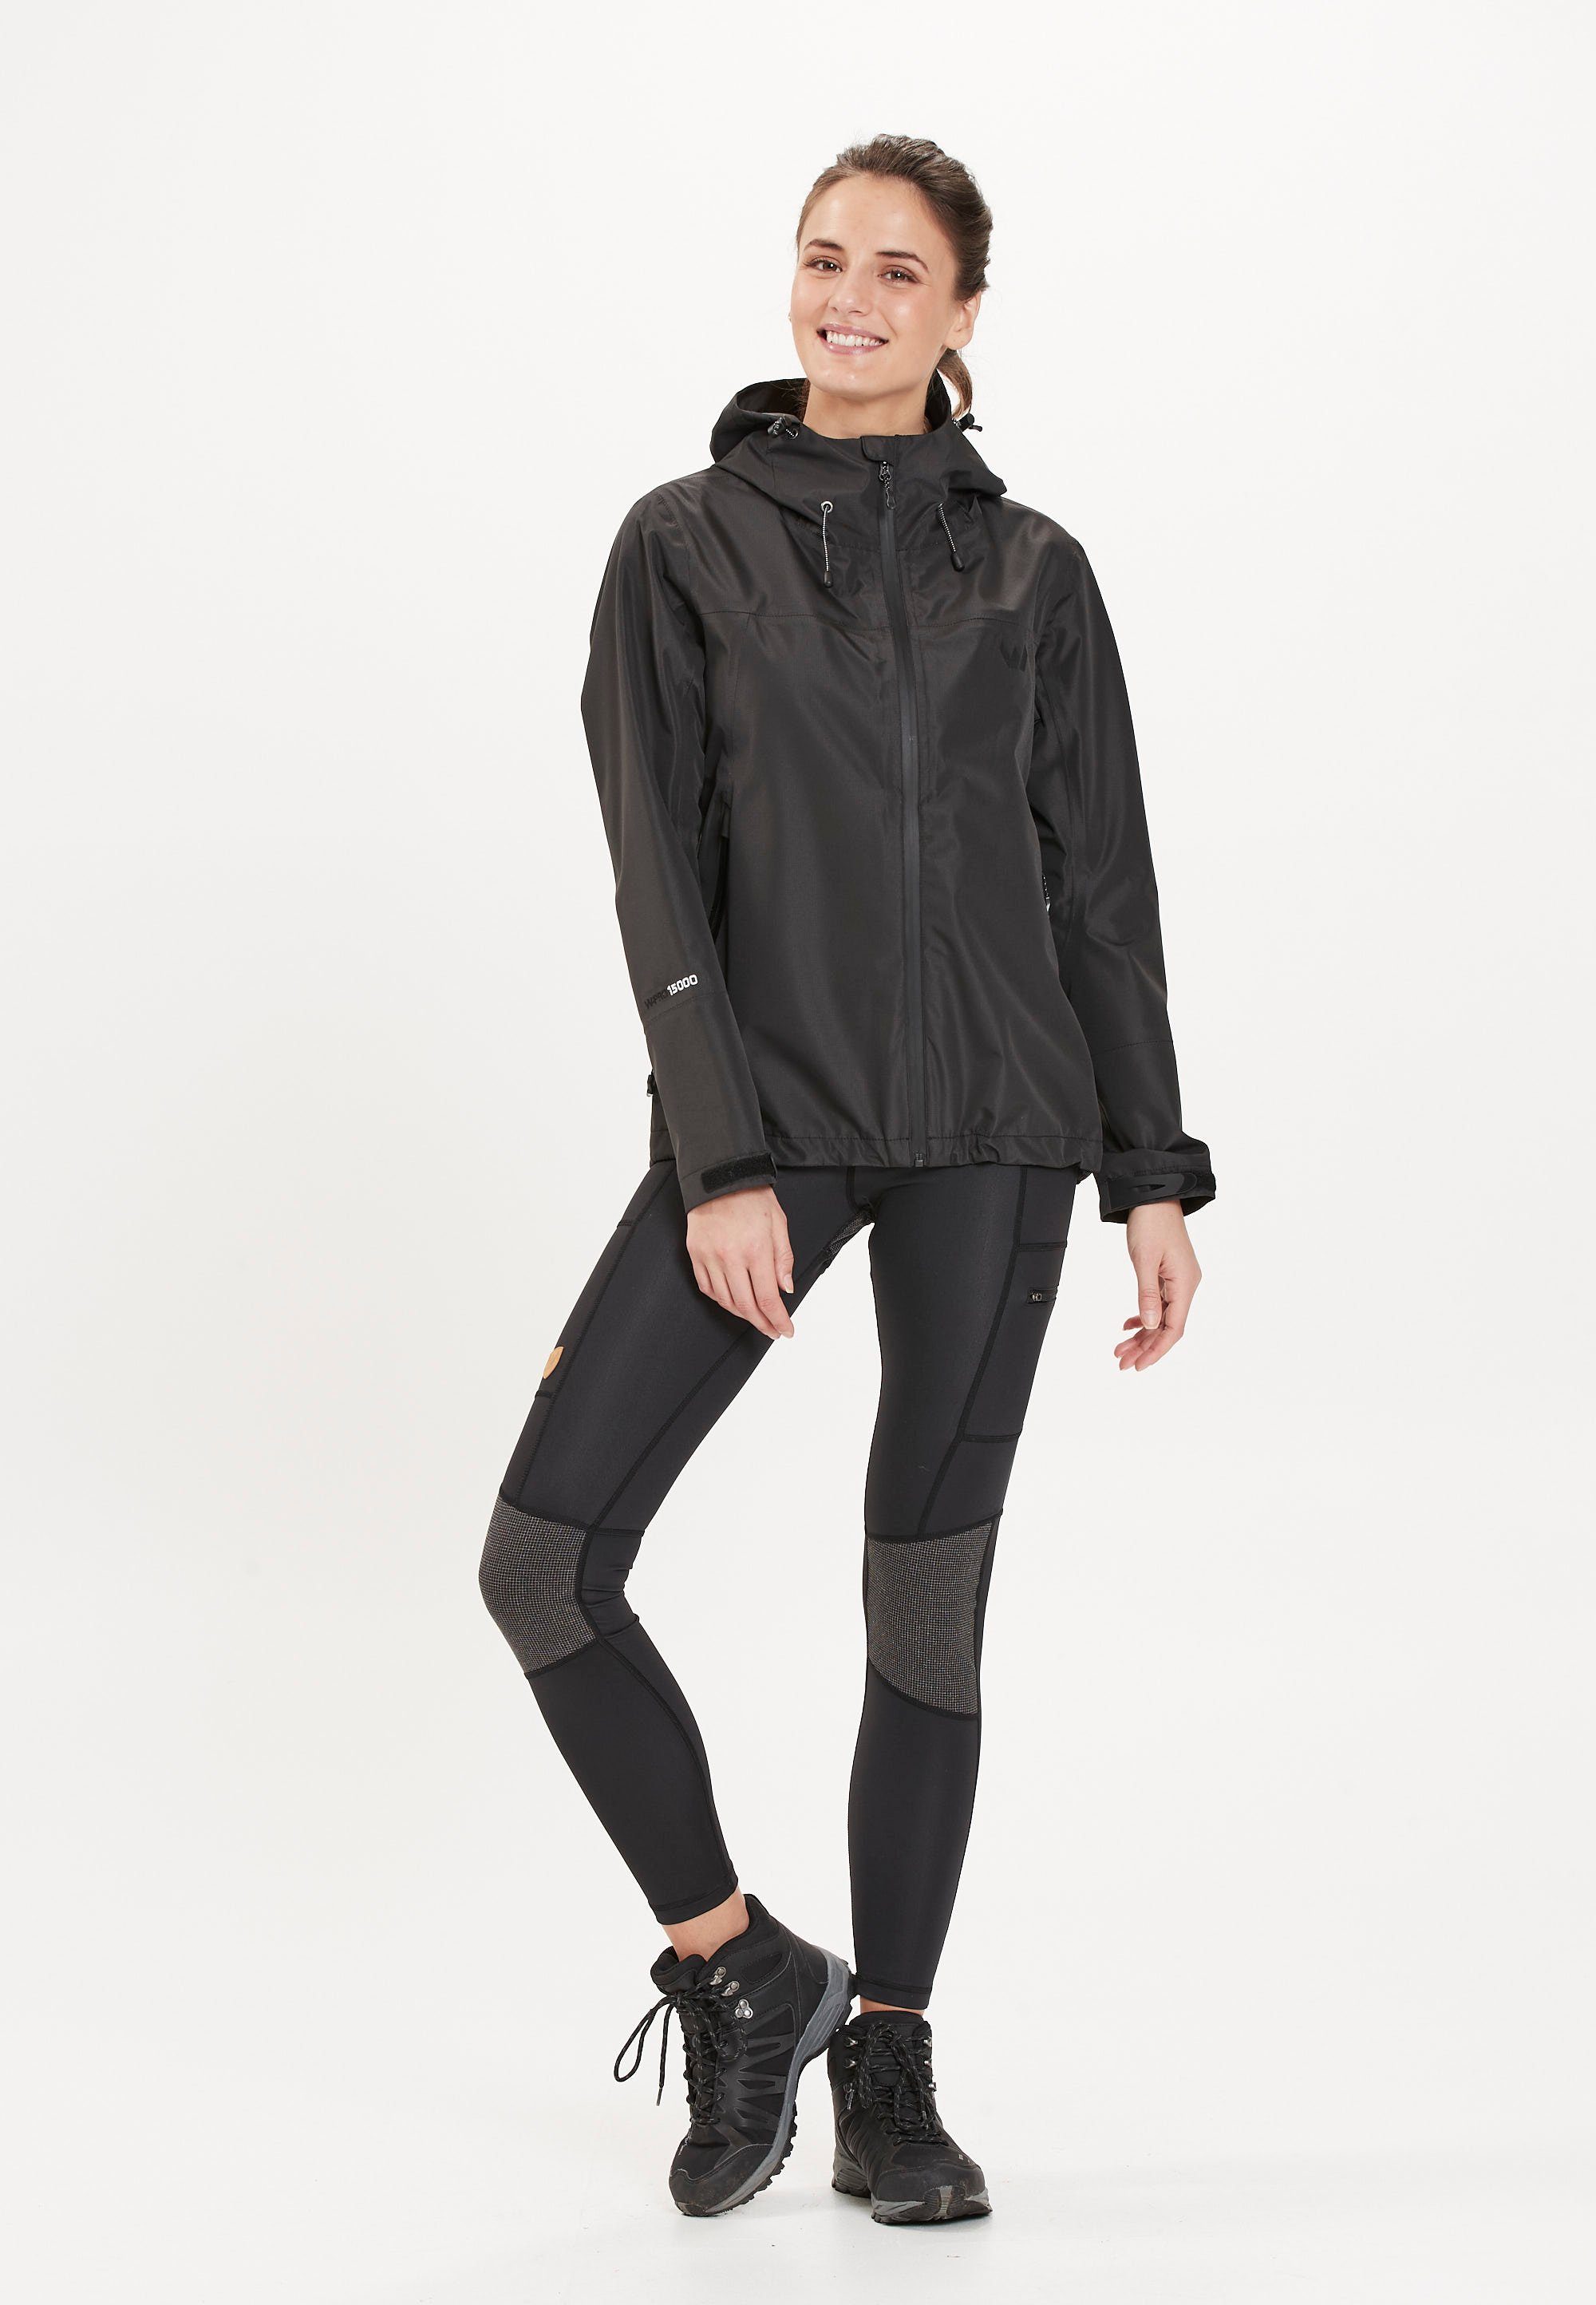 WHISTLER Softshelljacke BROOK Kapuze praktischer mit W 15000 Shell W-PRO Jacket schwarz